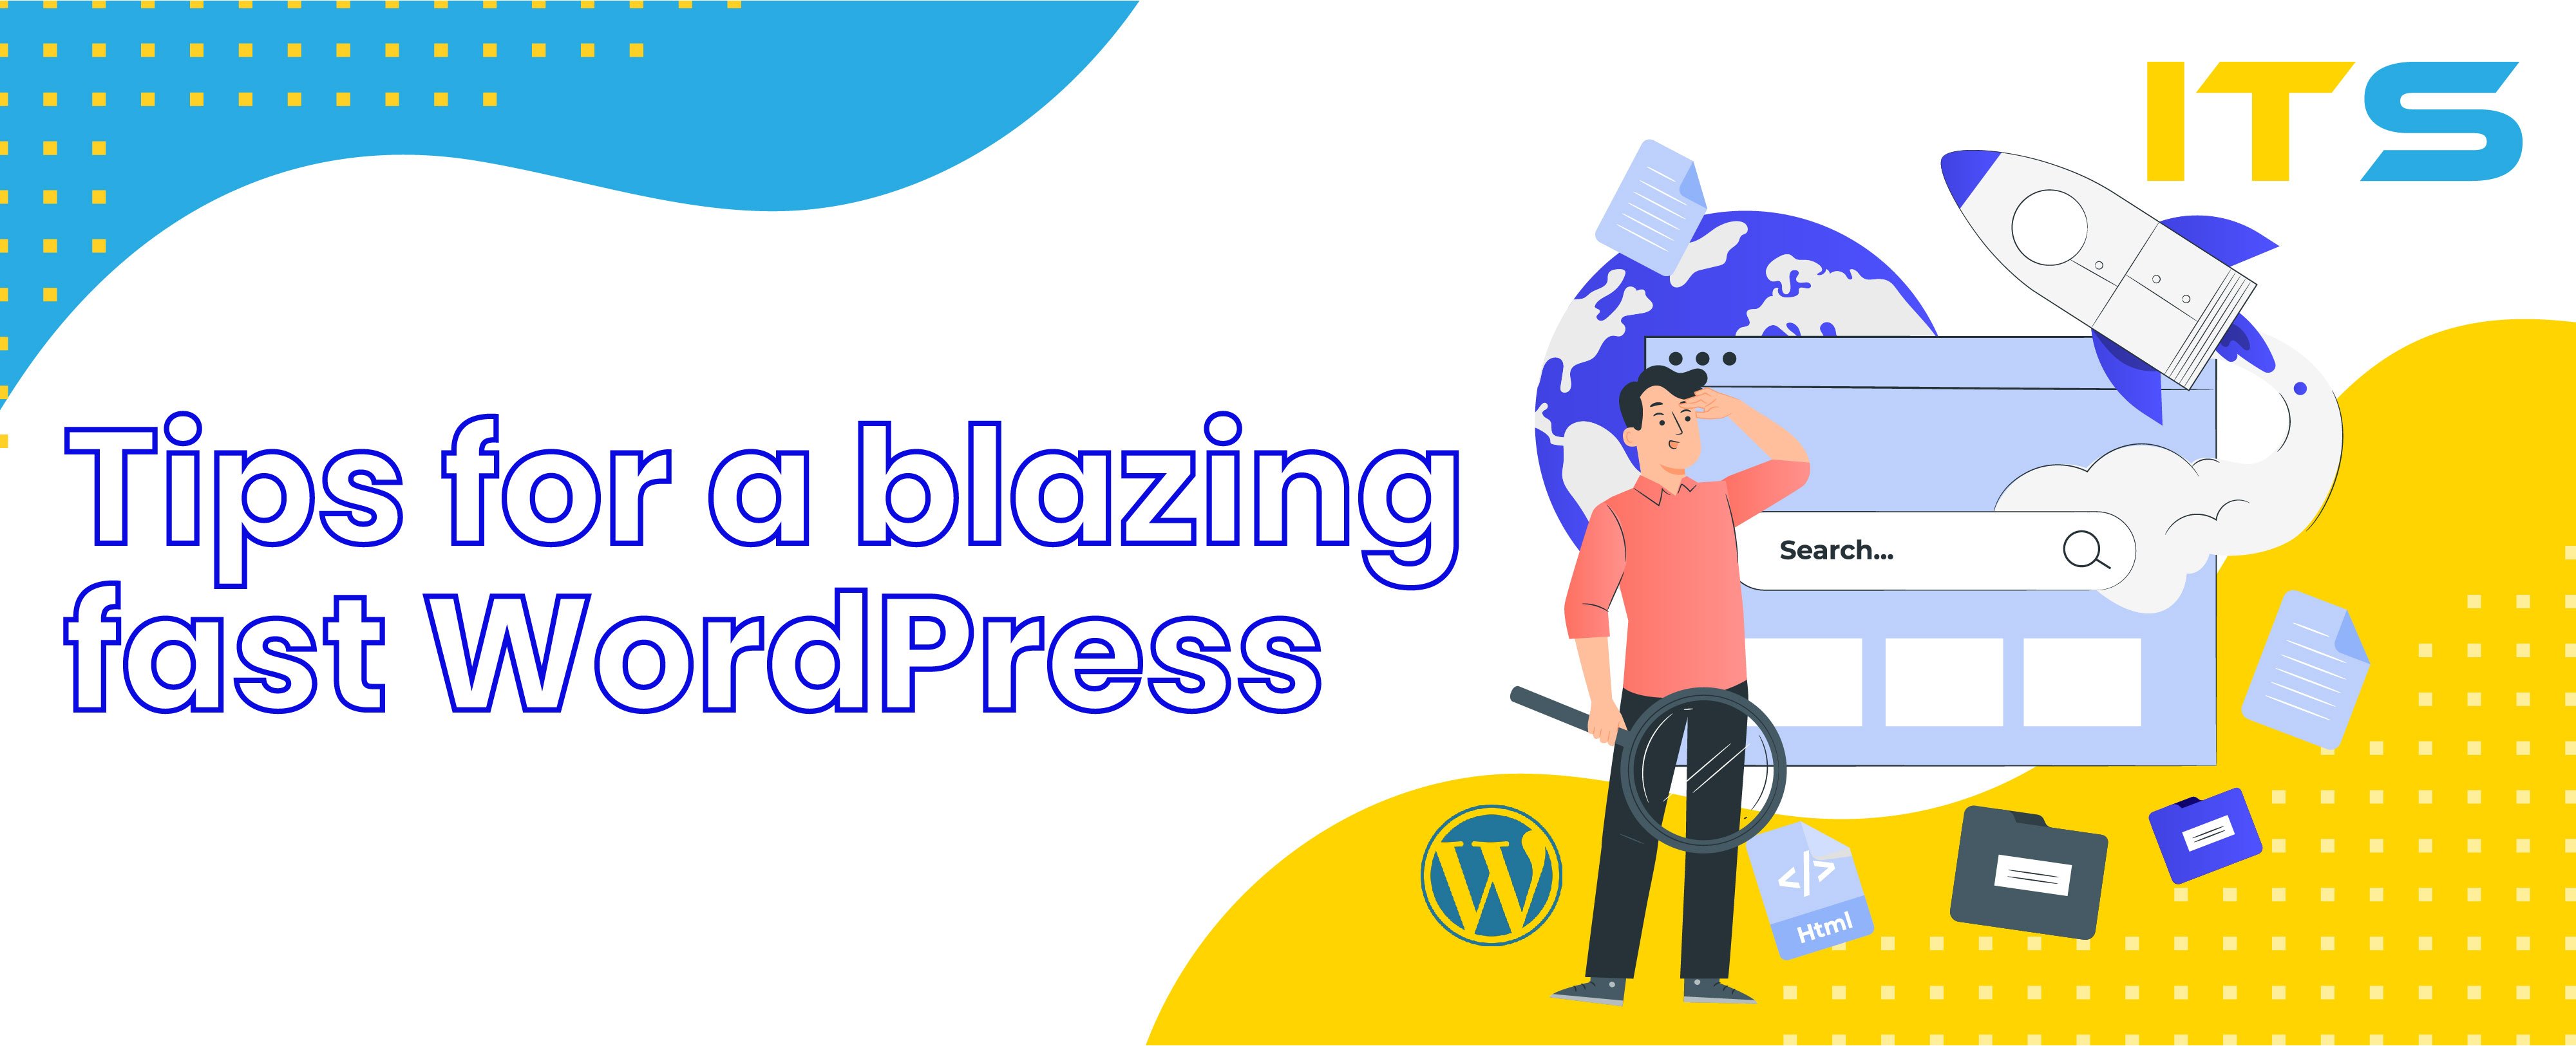 Tips for a blazing fast WordPress